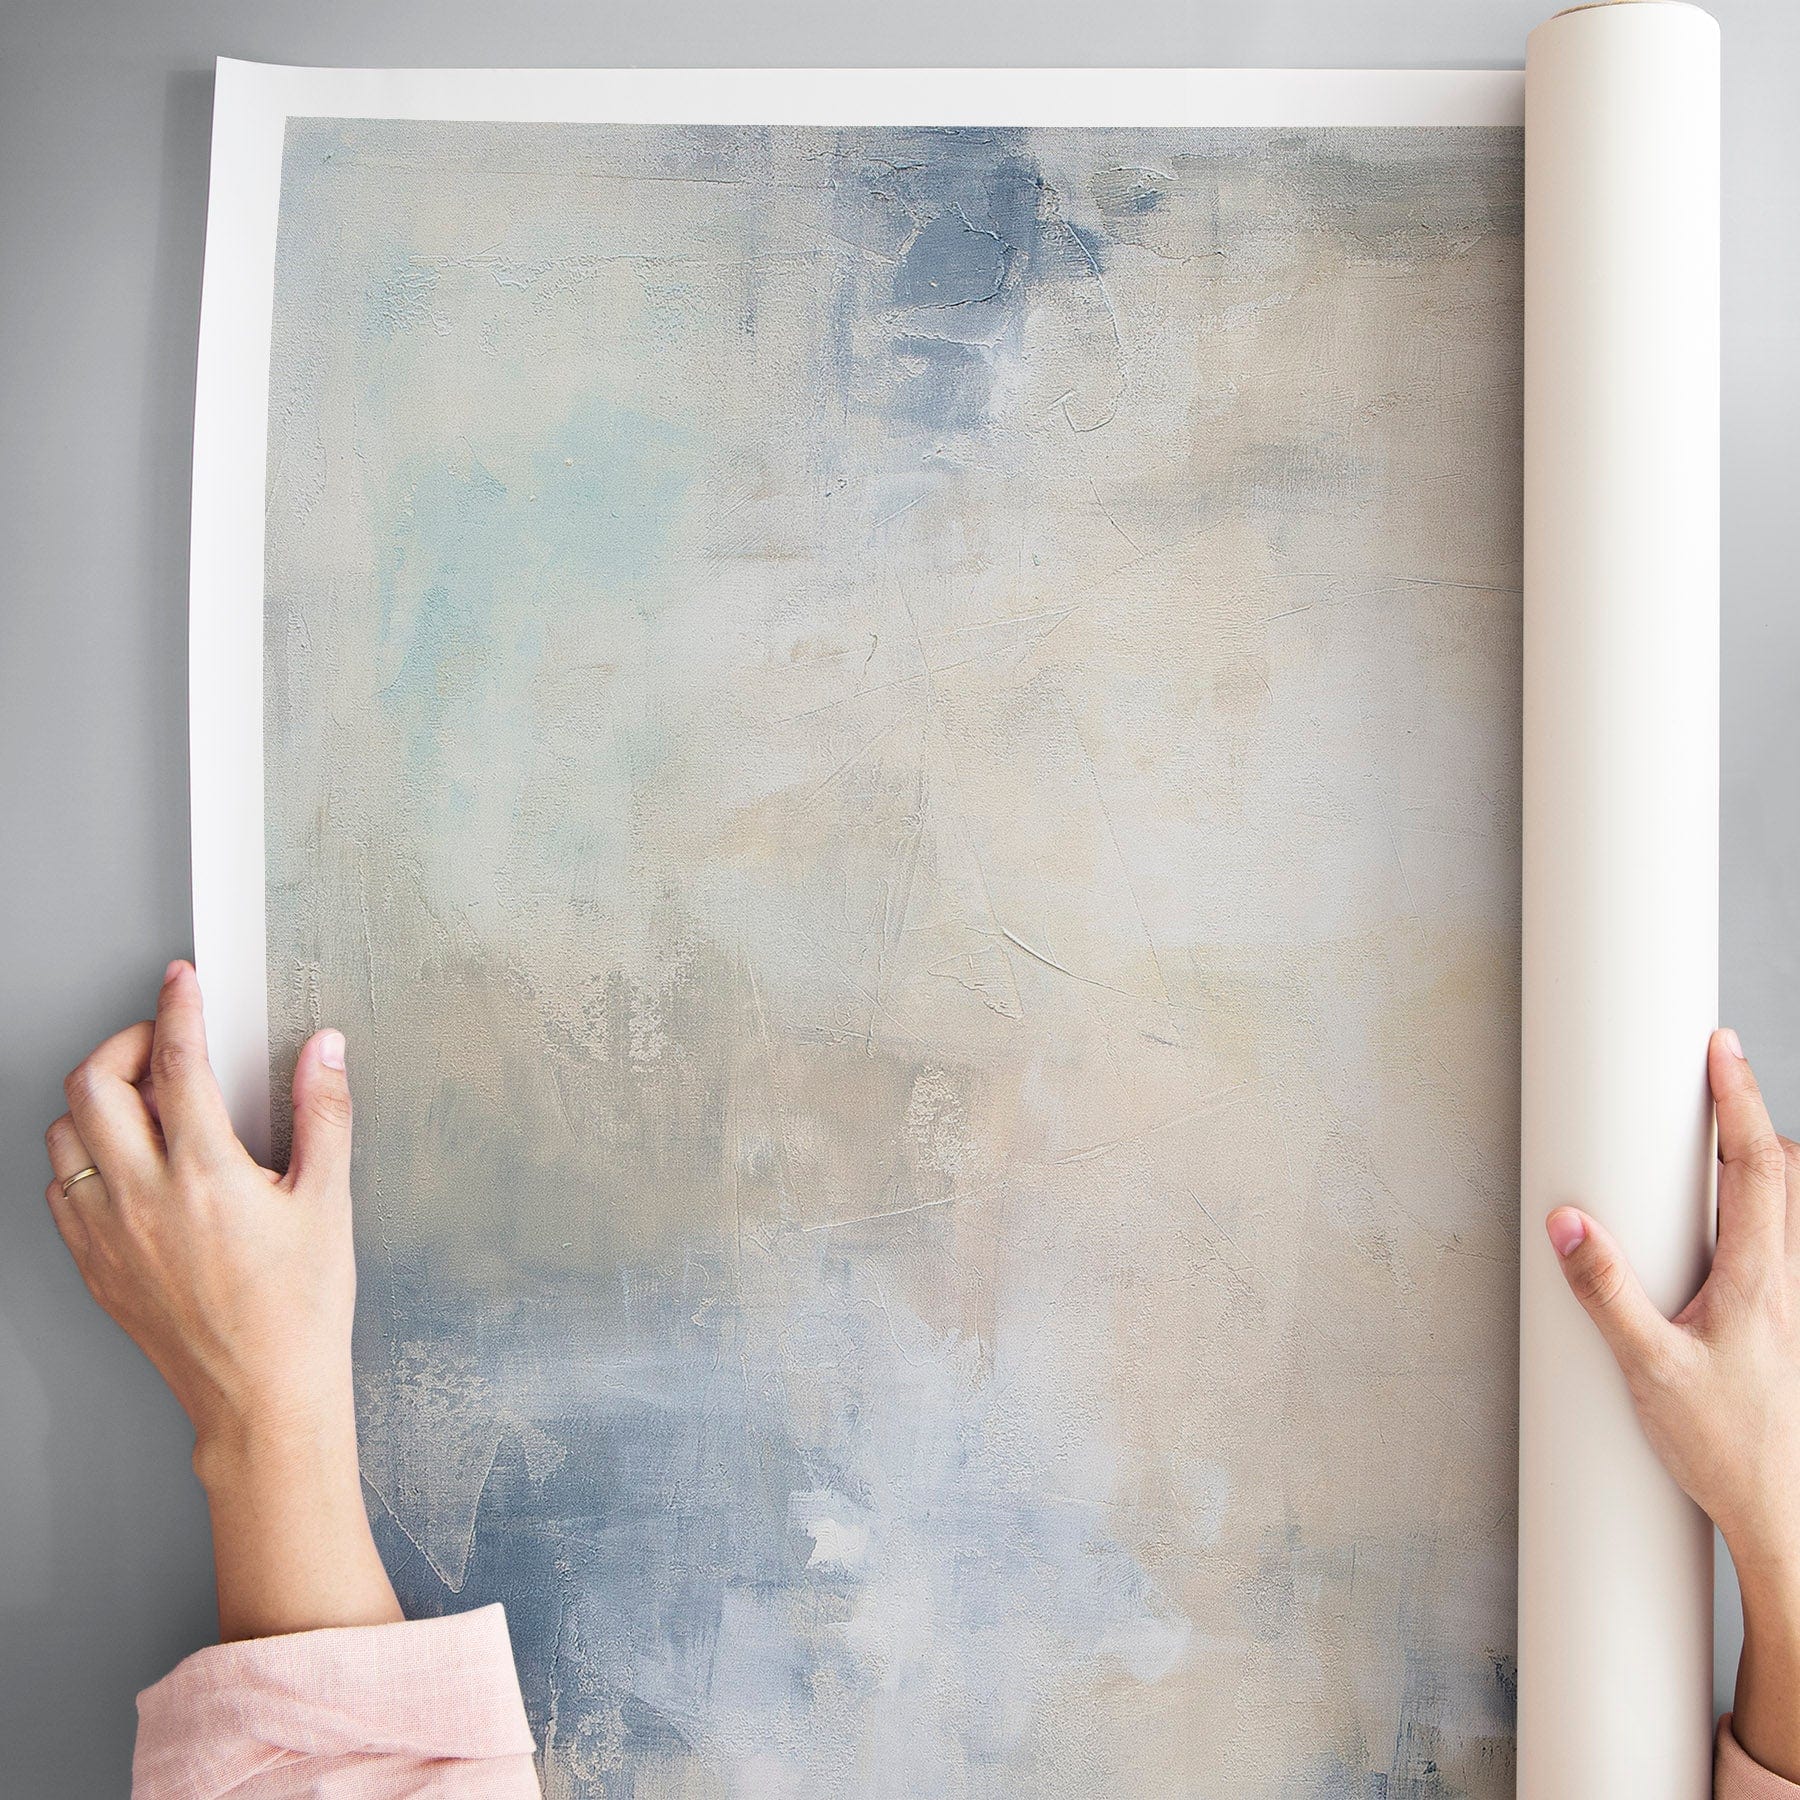 Julia Contacessi Fine Art Custom Canvas Print Morning Blush - Canvas Print